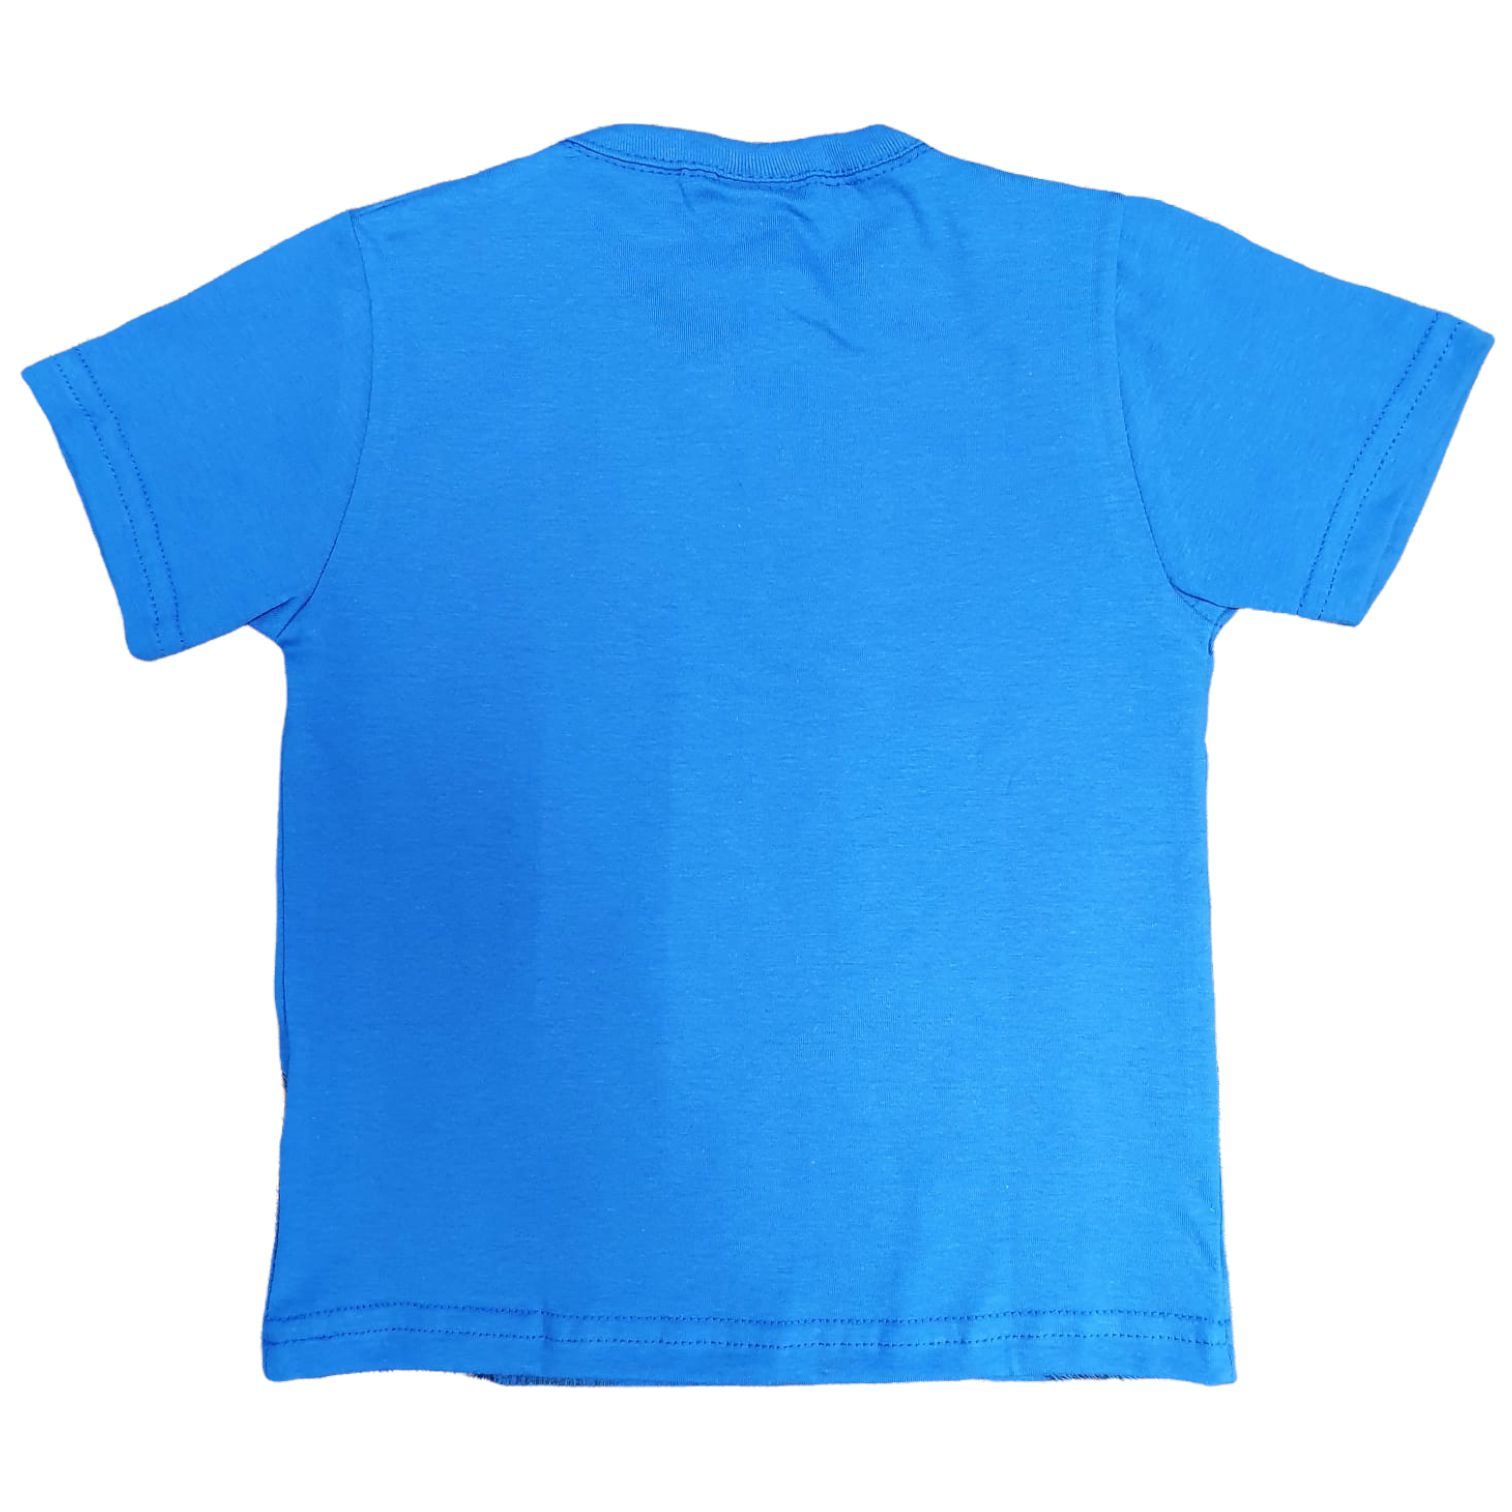 Camiseta MK Infantil Azul